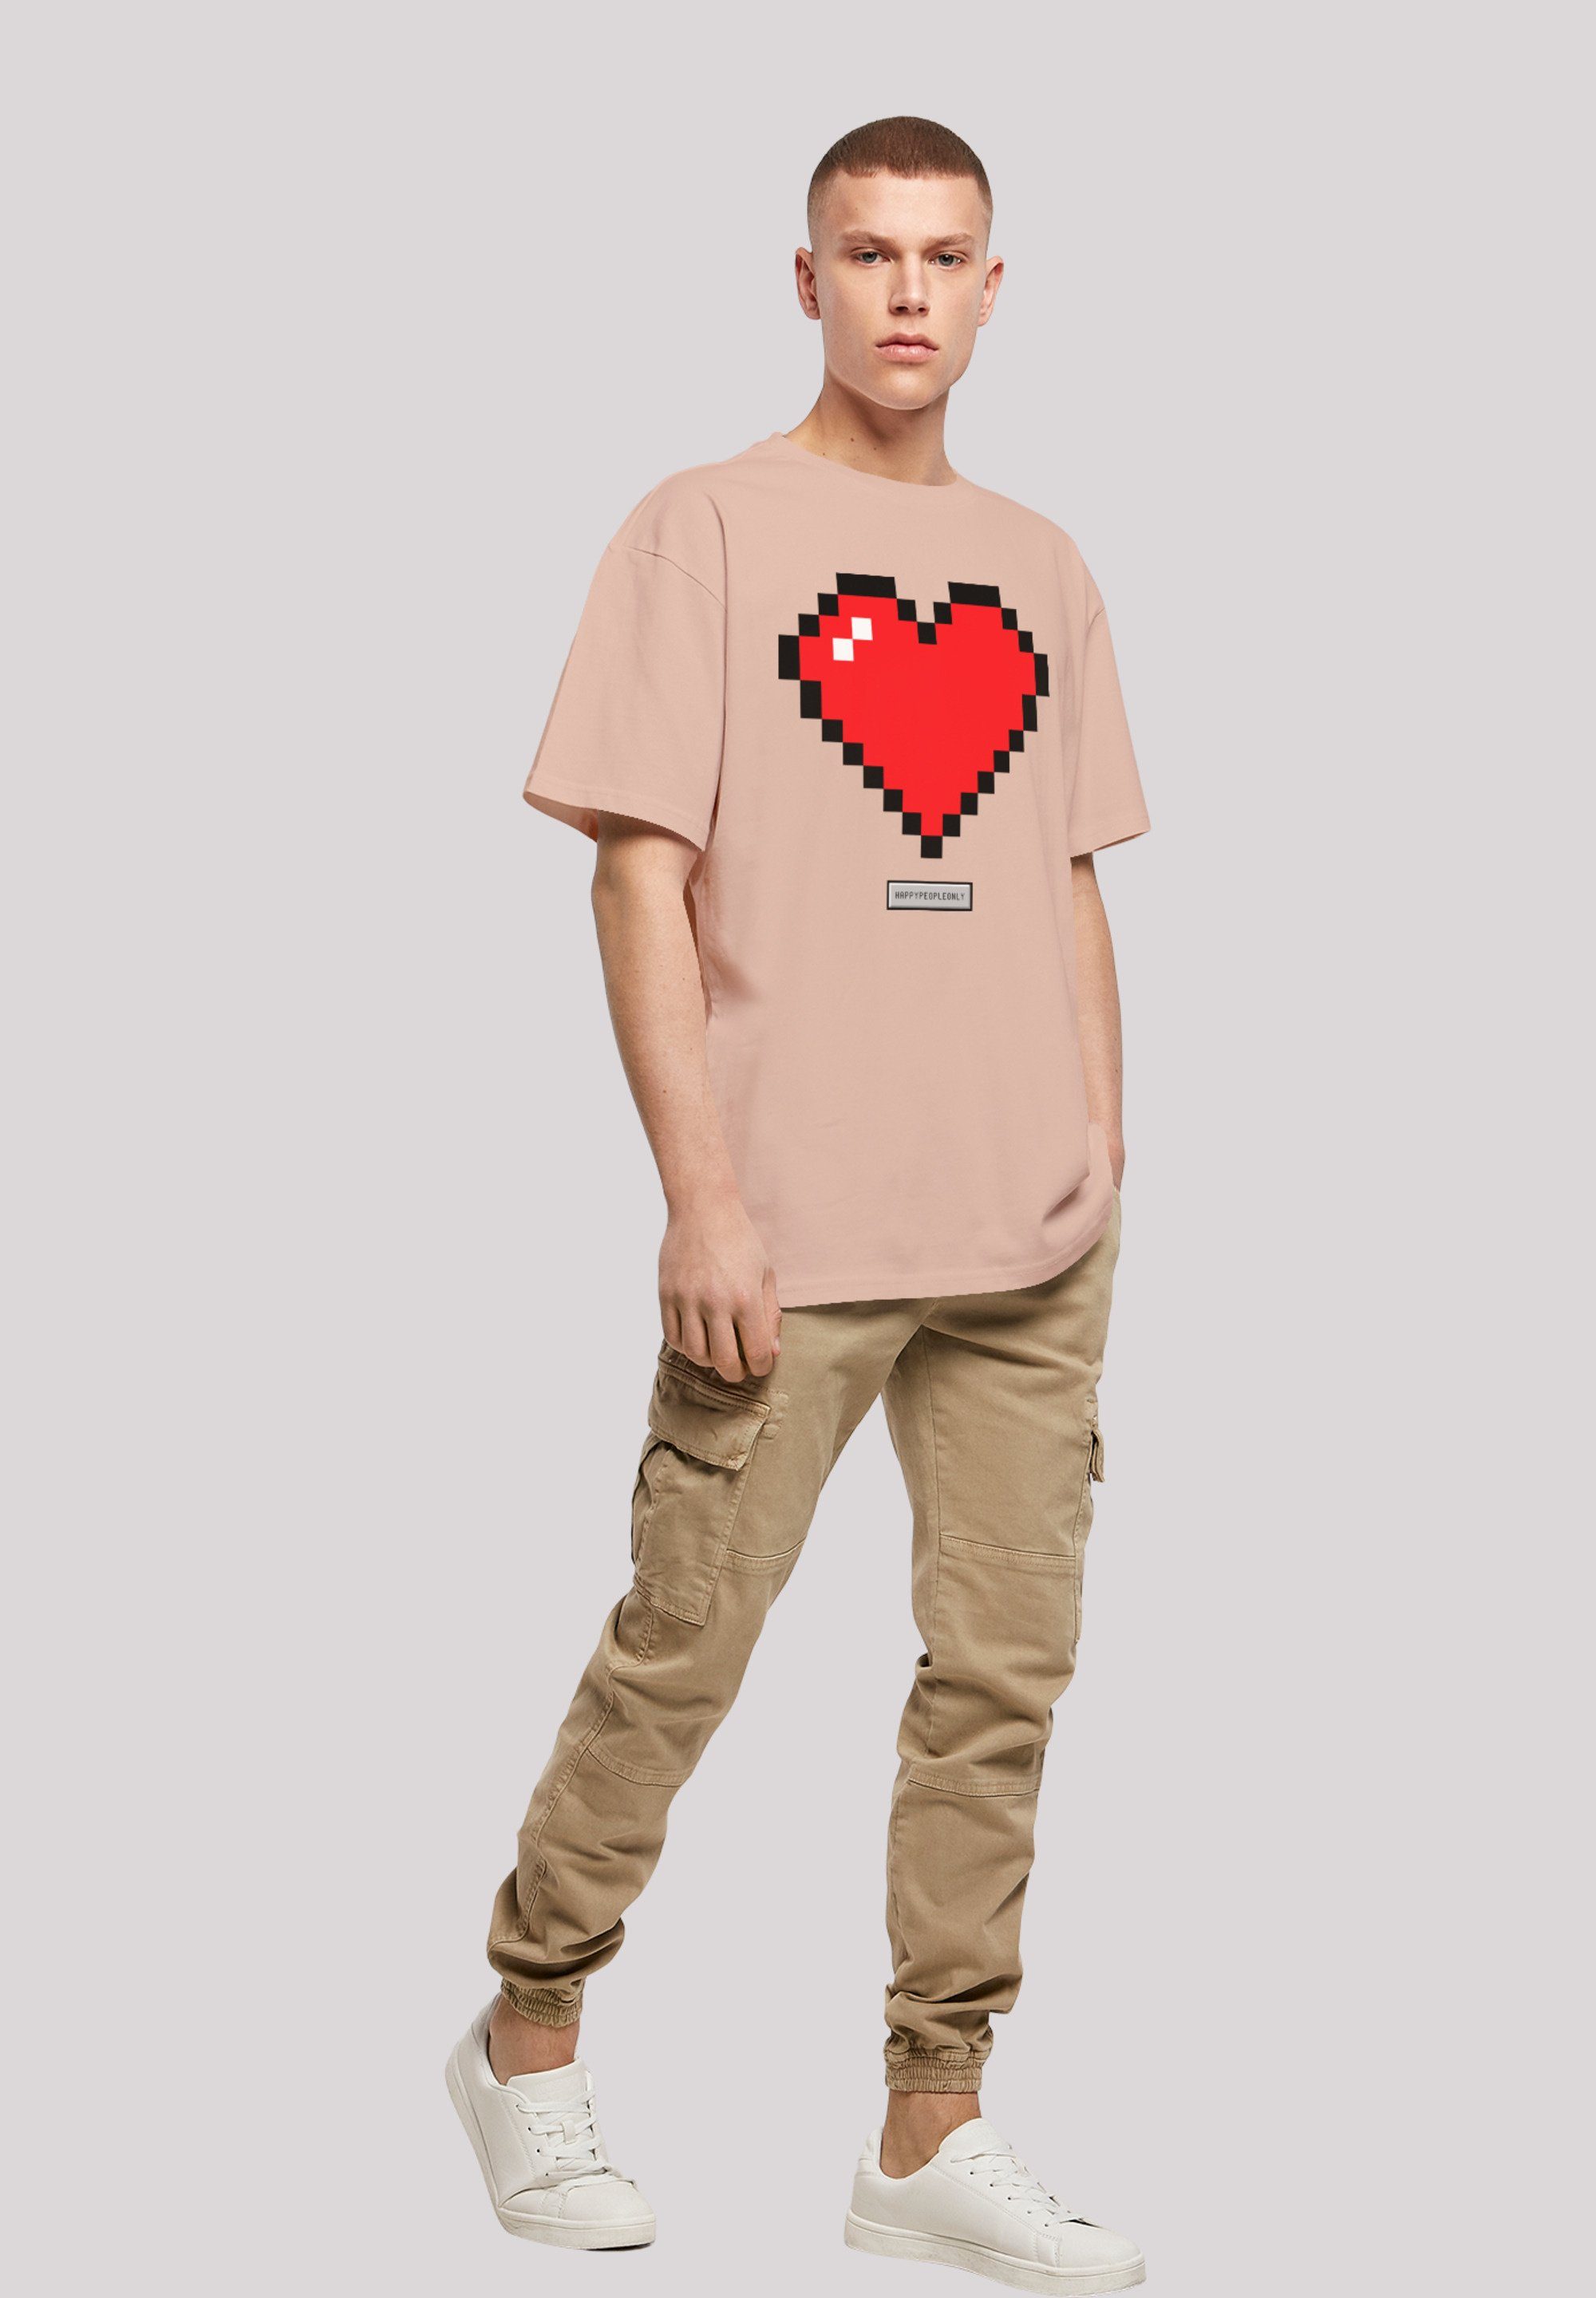 Print Pixel Happy T-Shirt Herz Good People F4NT4STIC amber Vibes